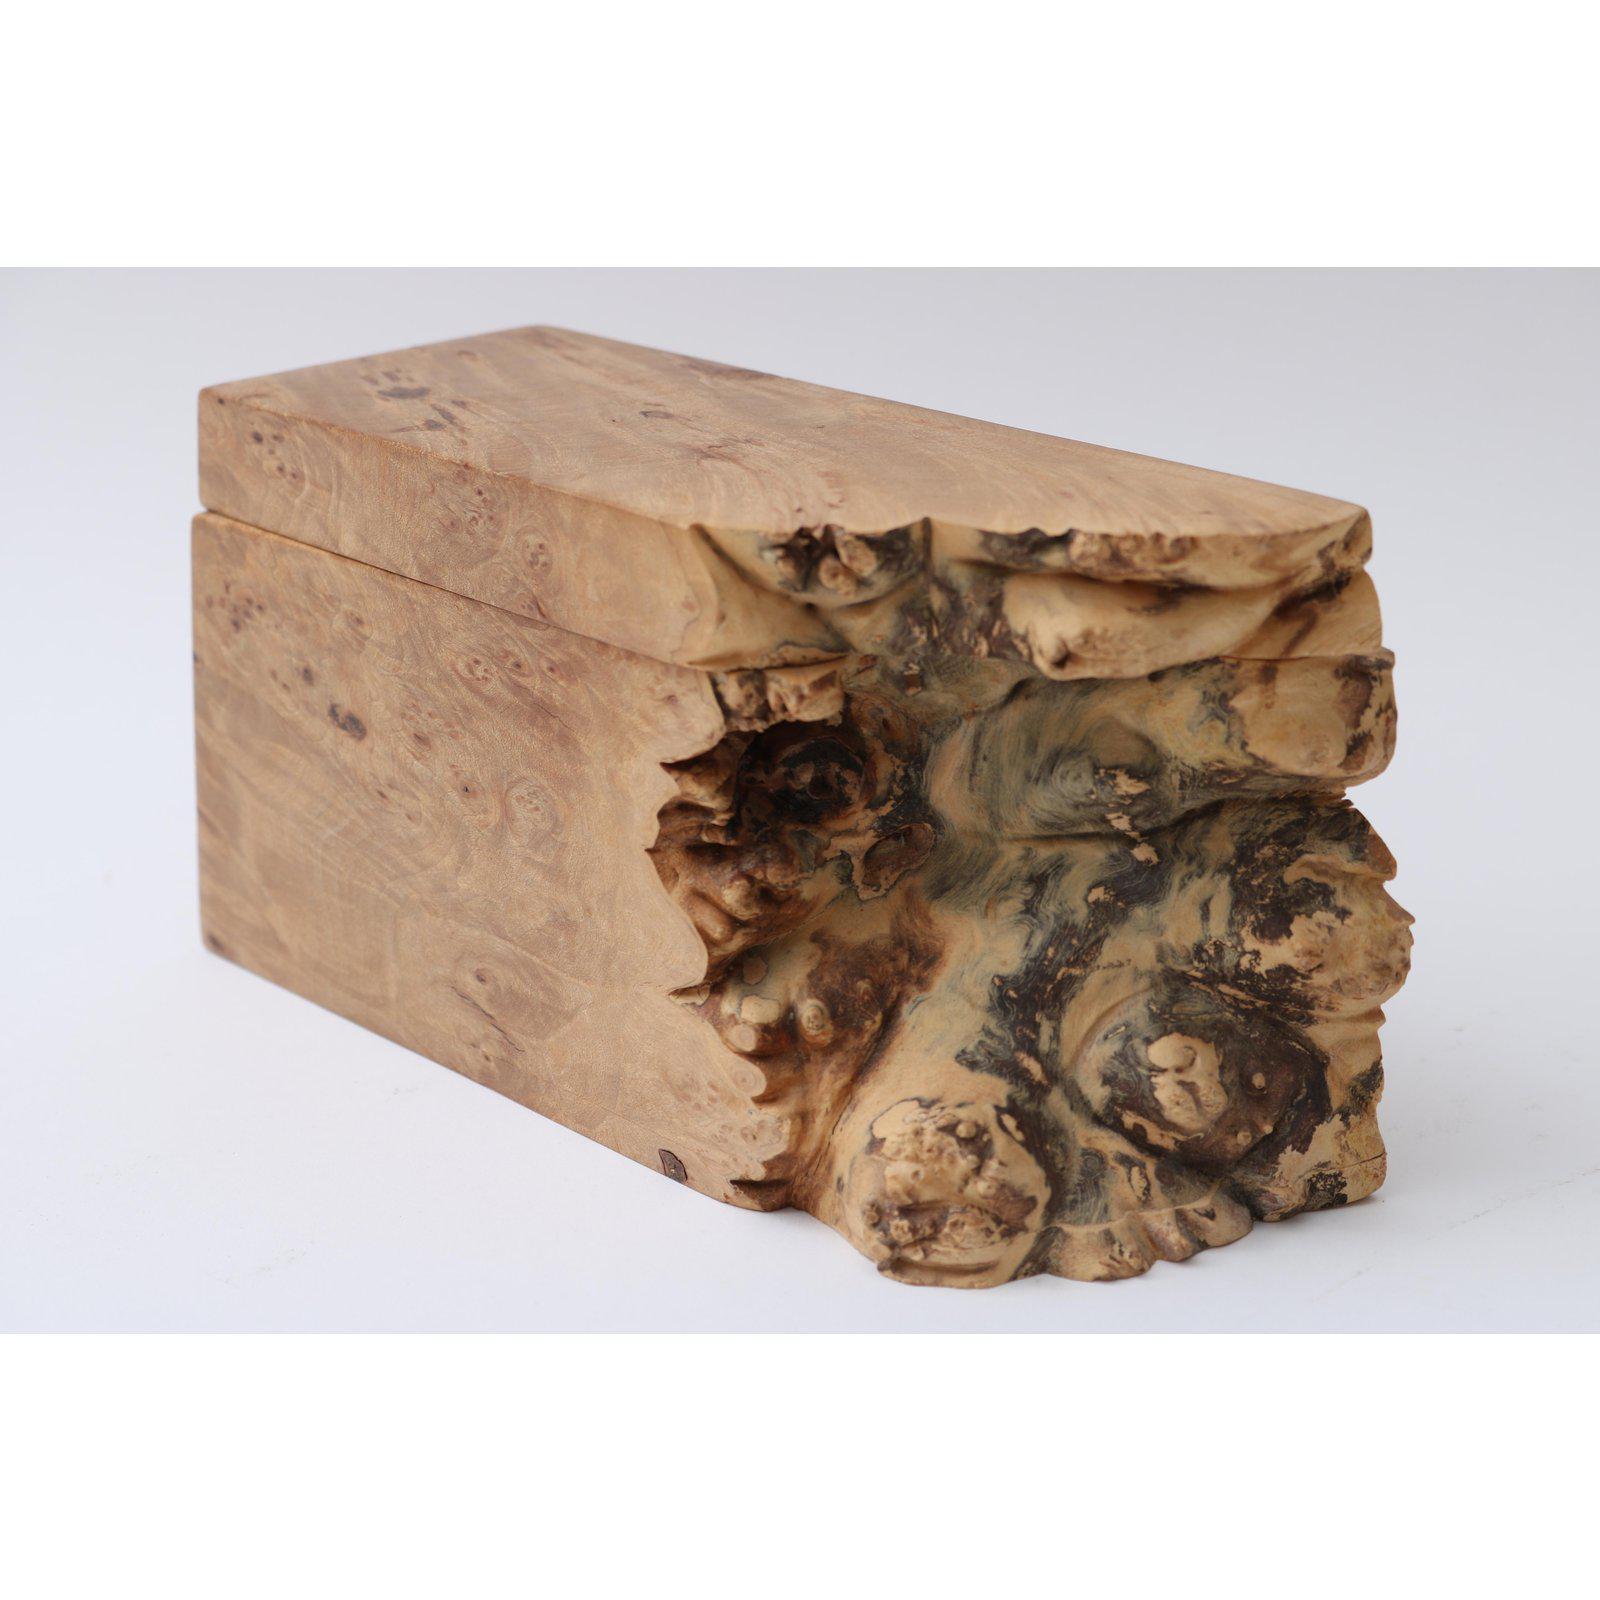 This stylish, organic burl wood box was created by the American artisan Michael Elkan.